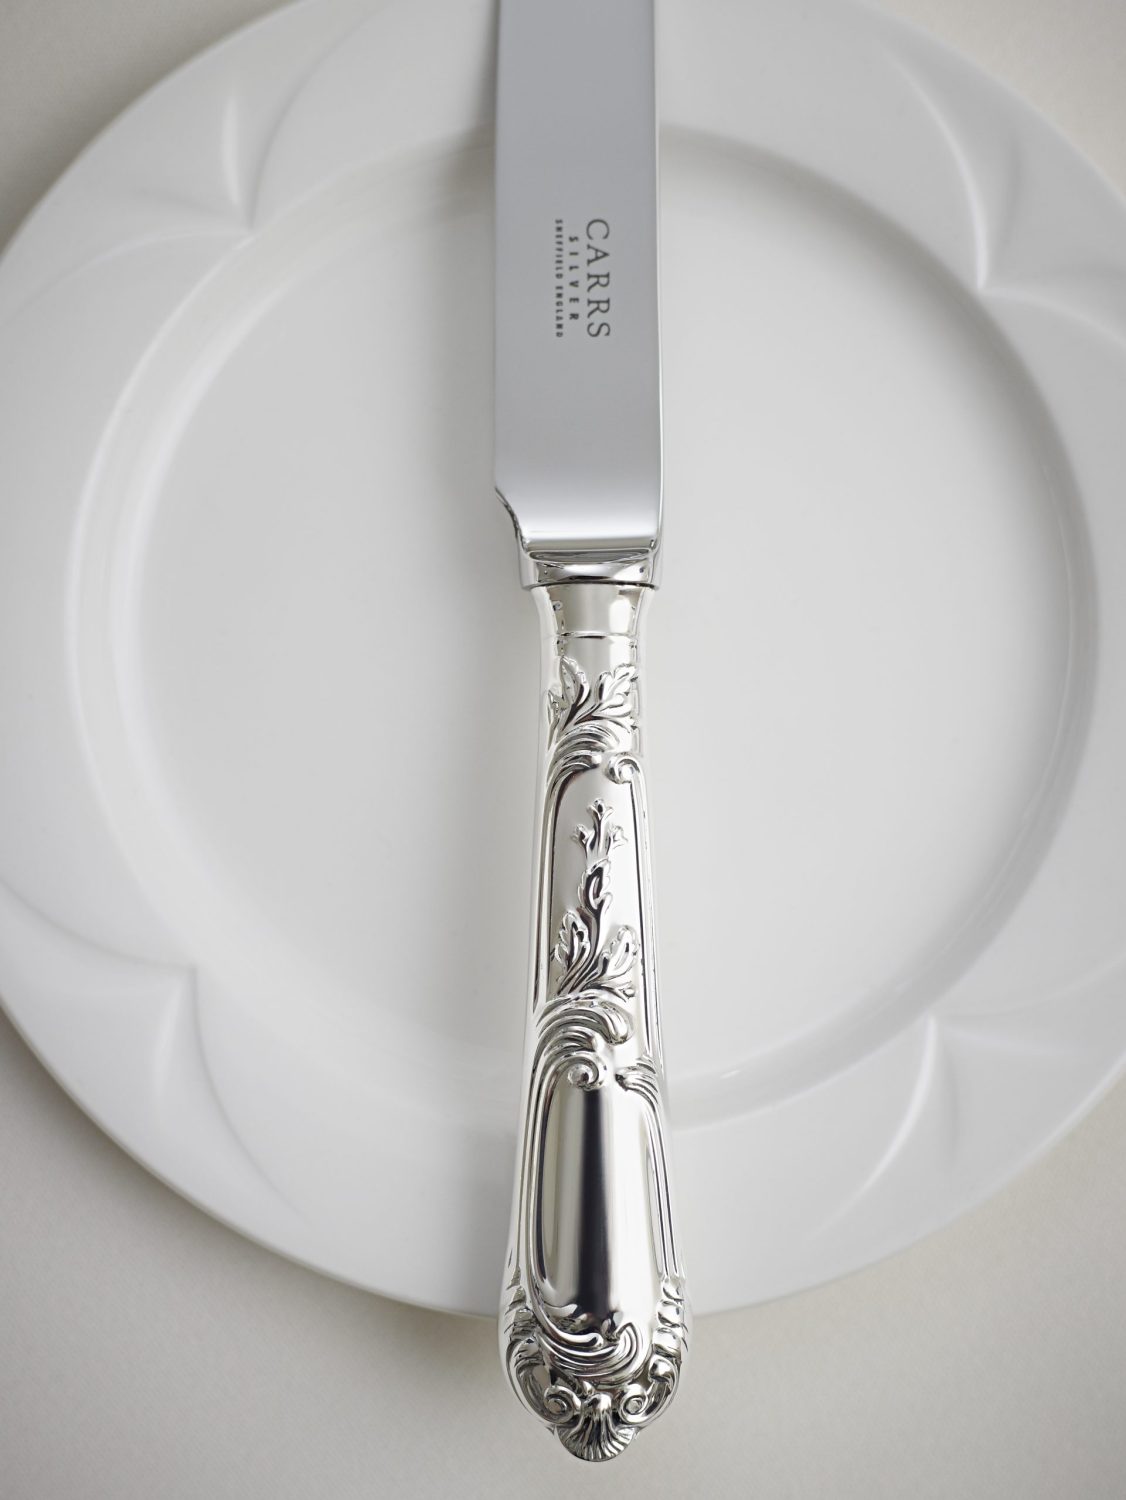 Luxury Hotel Silverware / Silver Hotel Cutlery